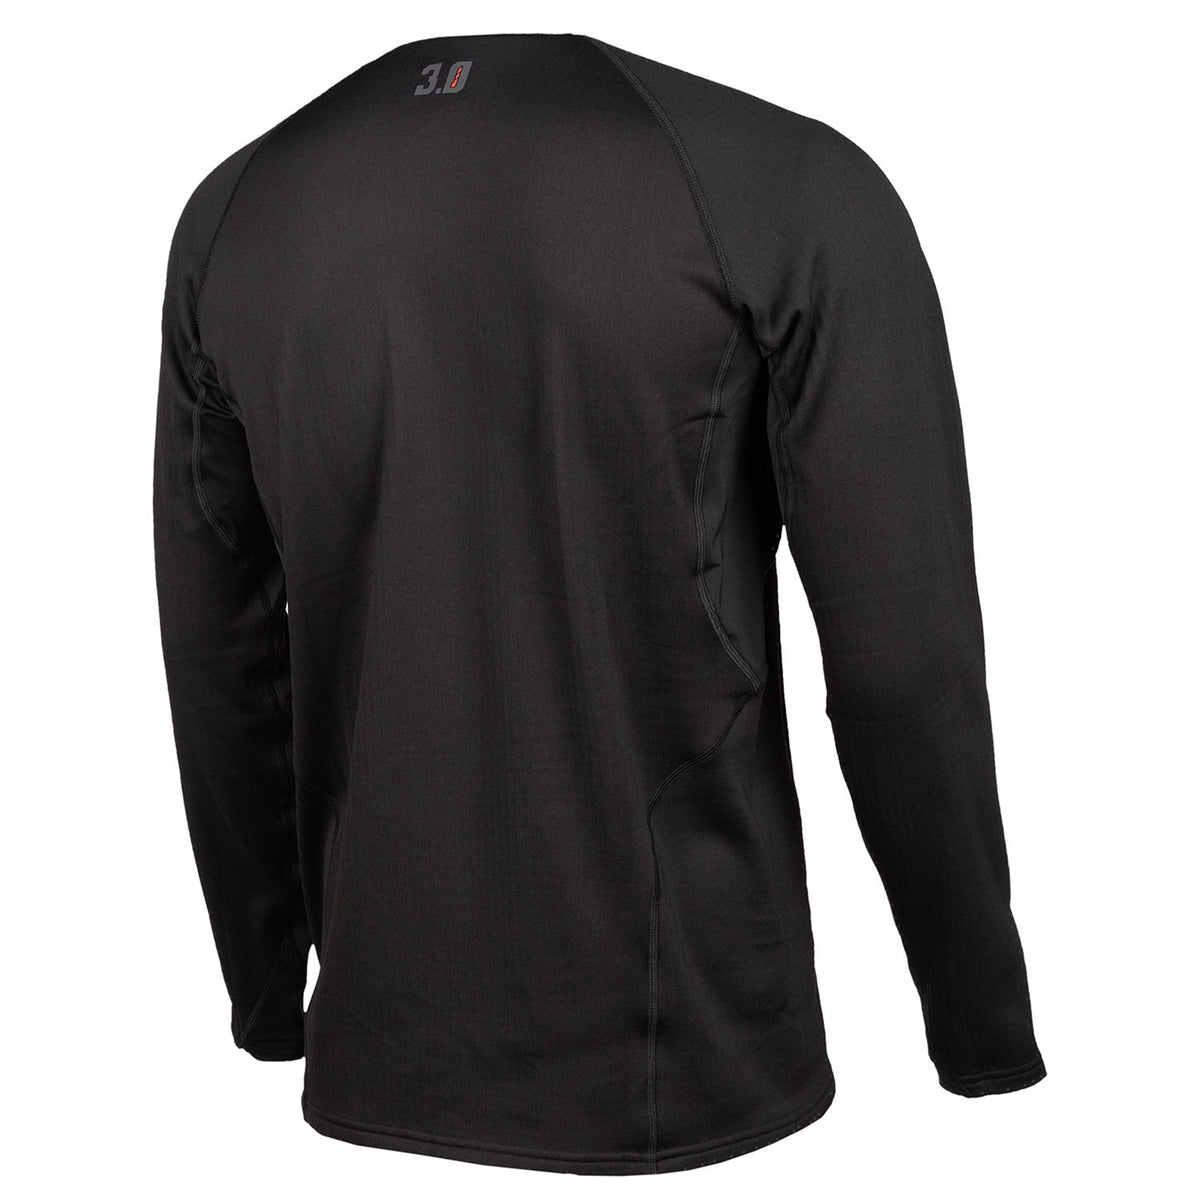 Klim Aggressor 3.0 Warming Base Layer Shirt